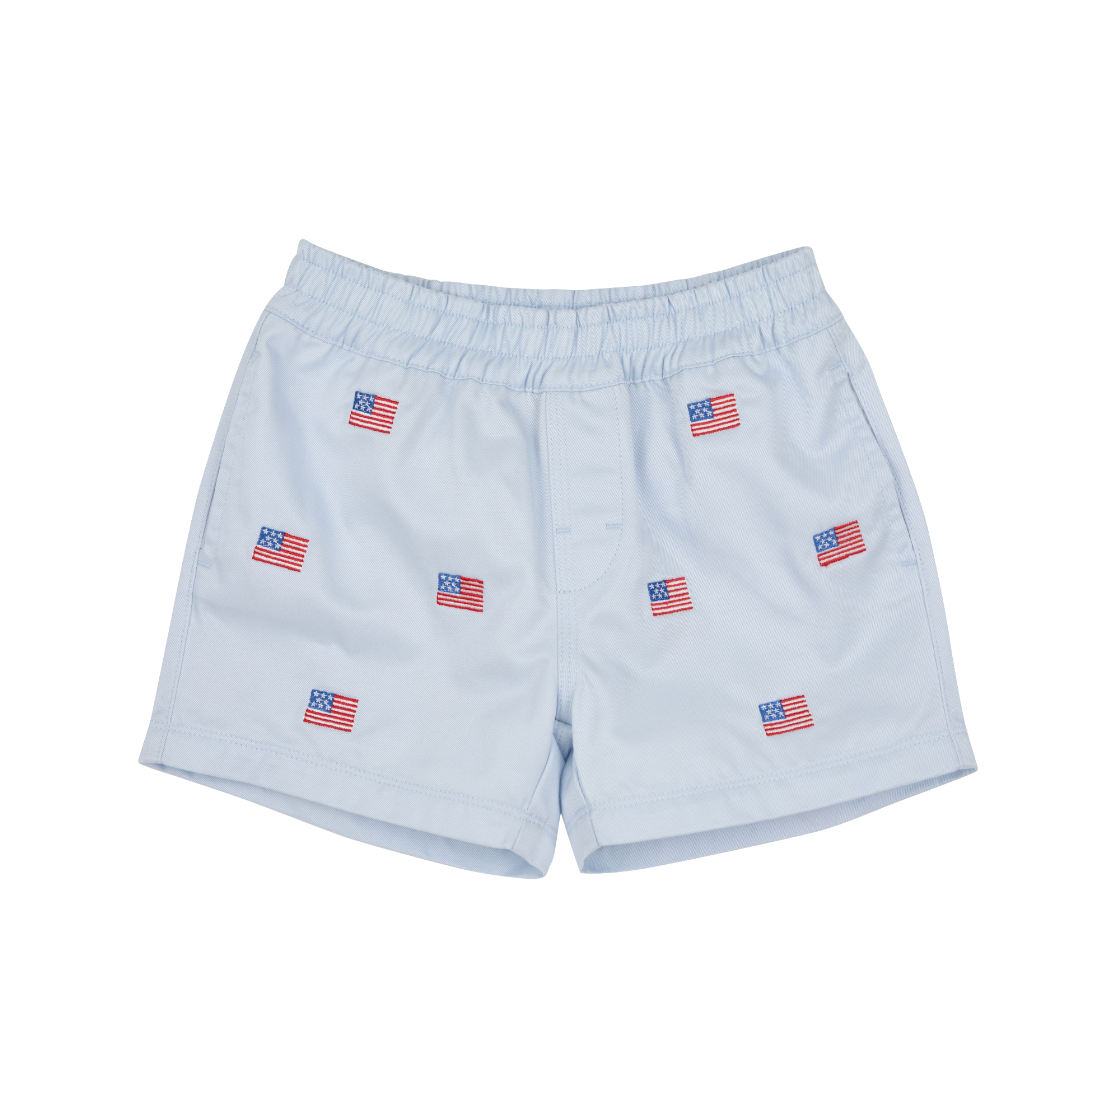 Critter Sheffield Shorts - Buckhead Blue/Multicolor/American Flags